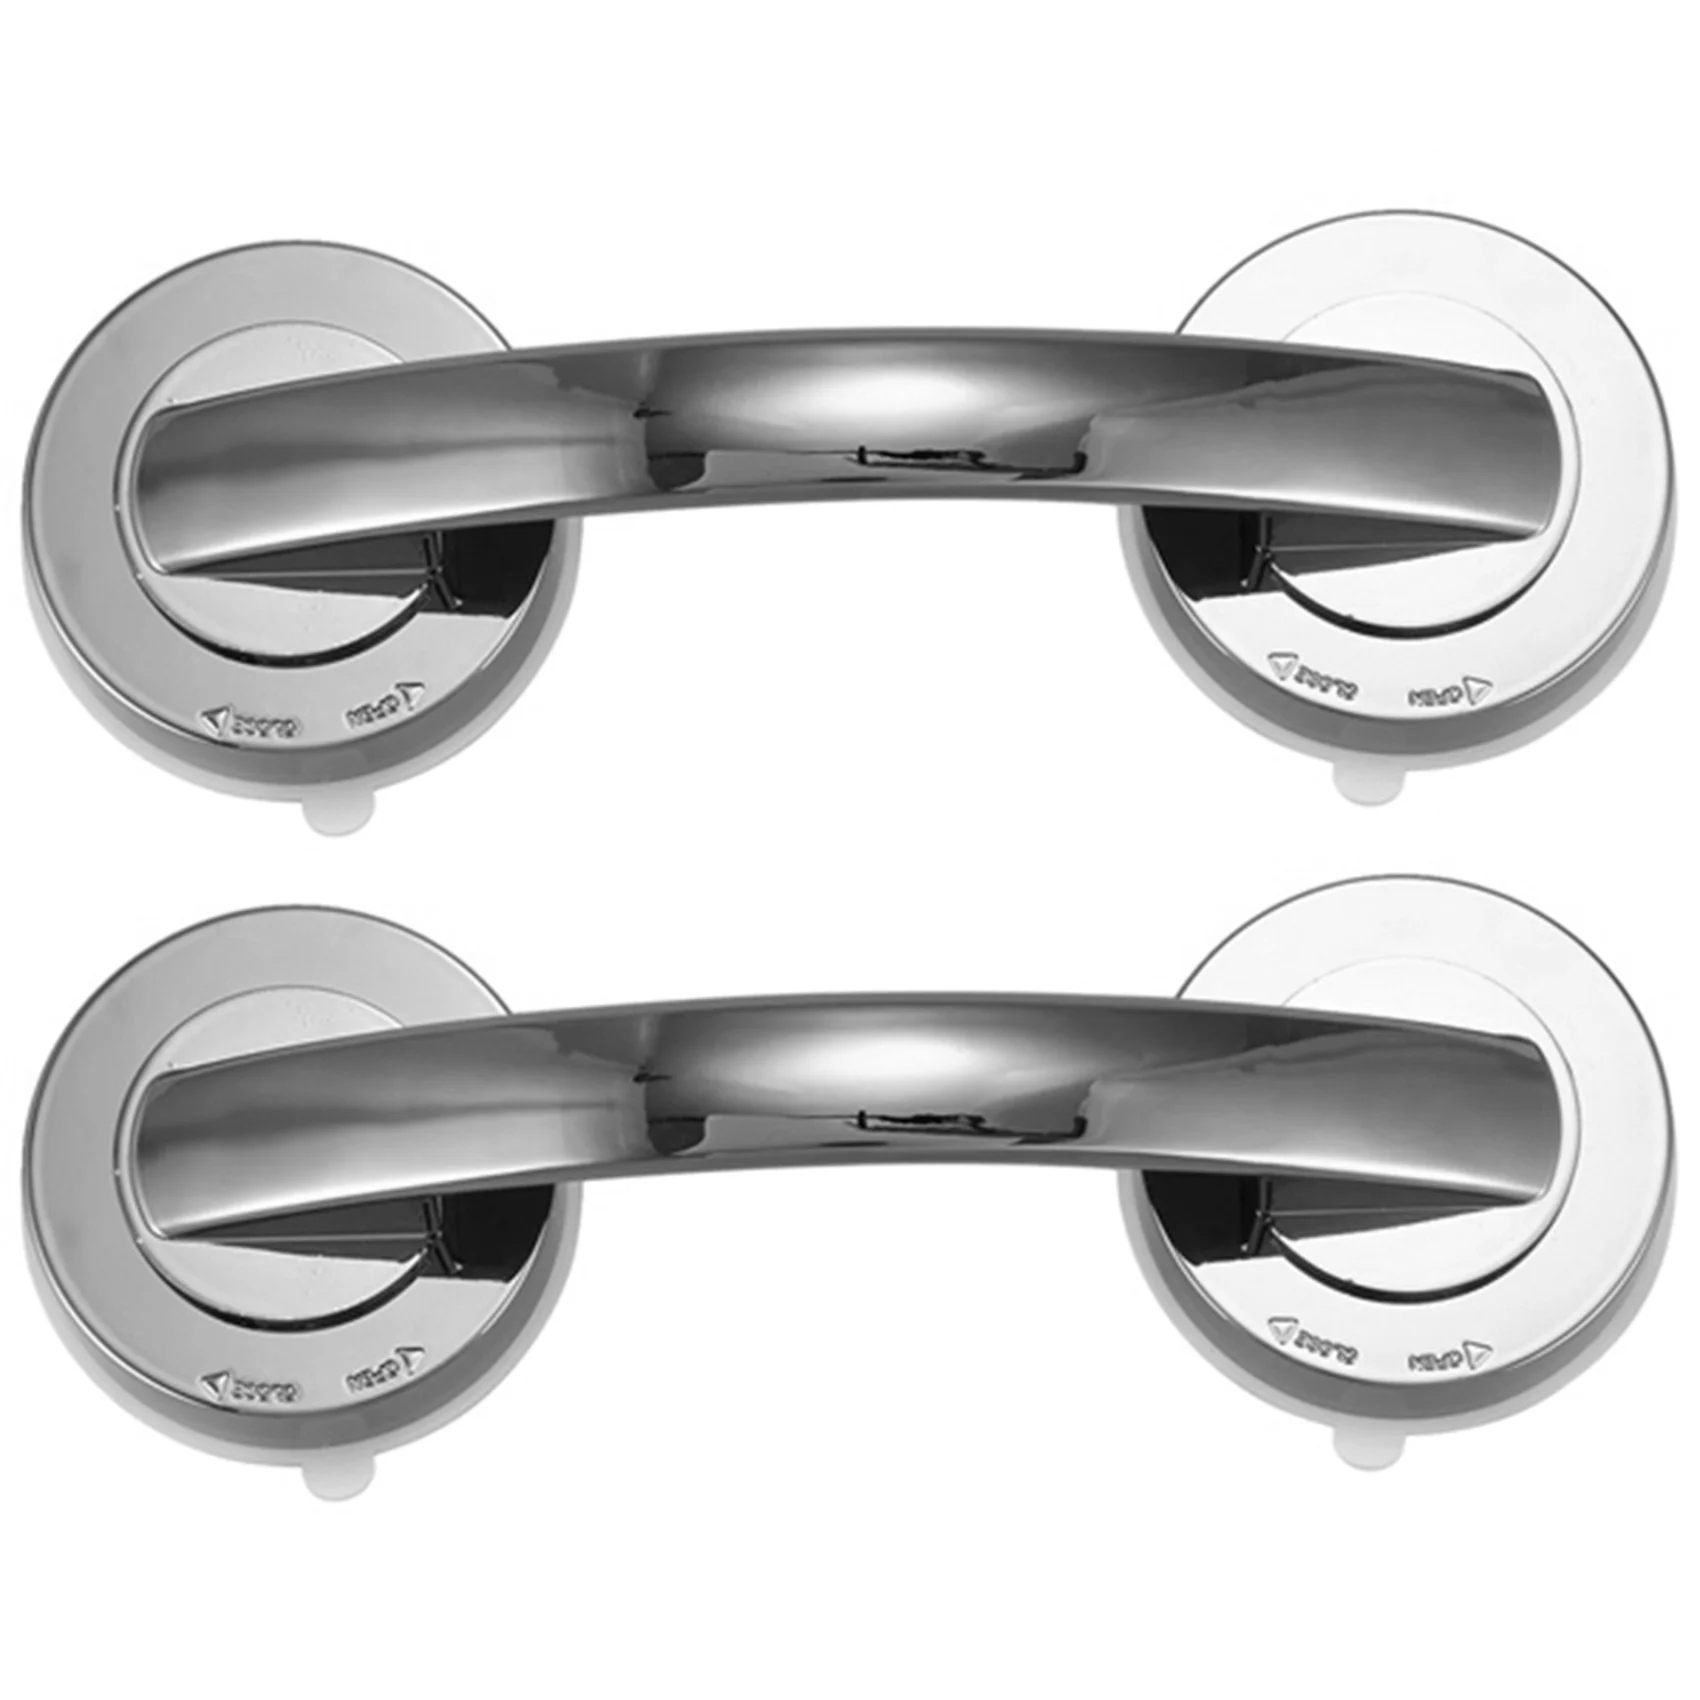 

2X Vacuum Sucker Suction Cup Handrail Bathroom Super Grip Safety Grab Bar Handle for Glass Door Bathroom Elder